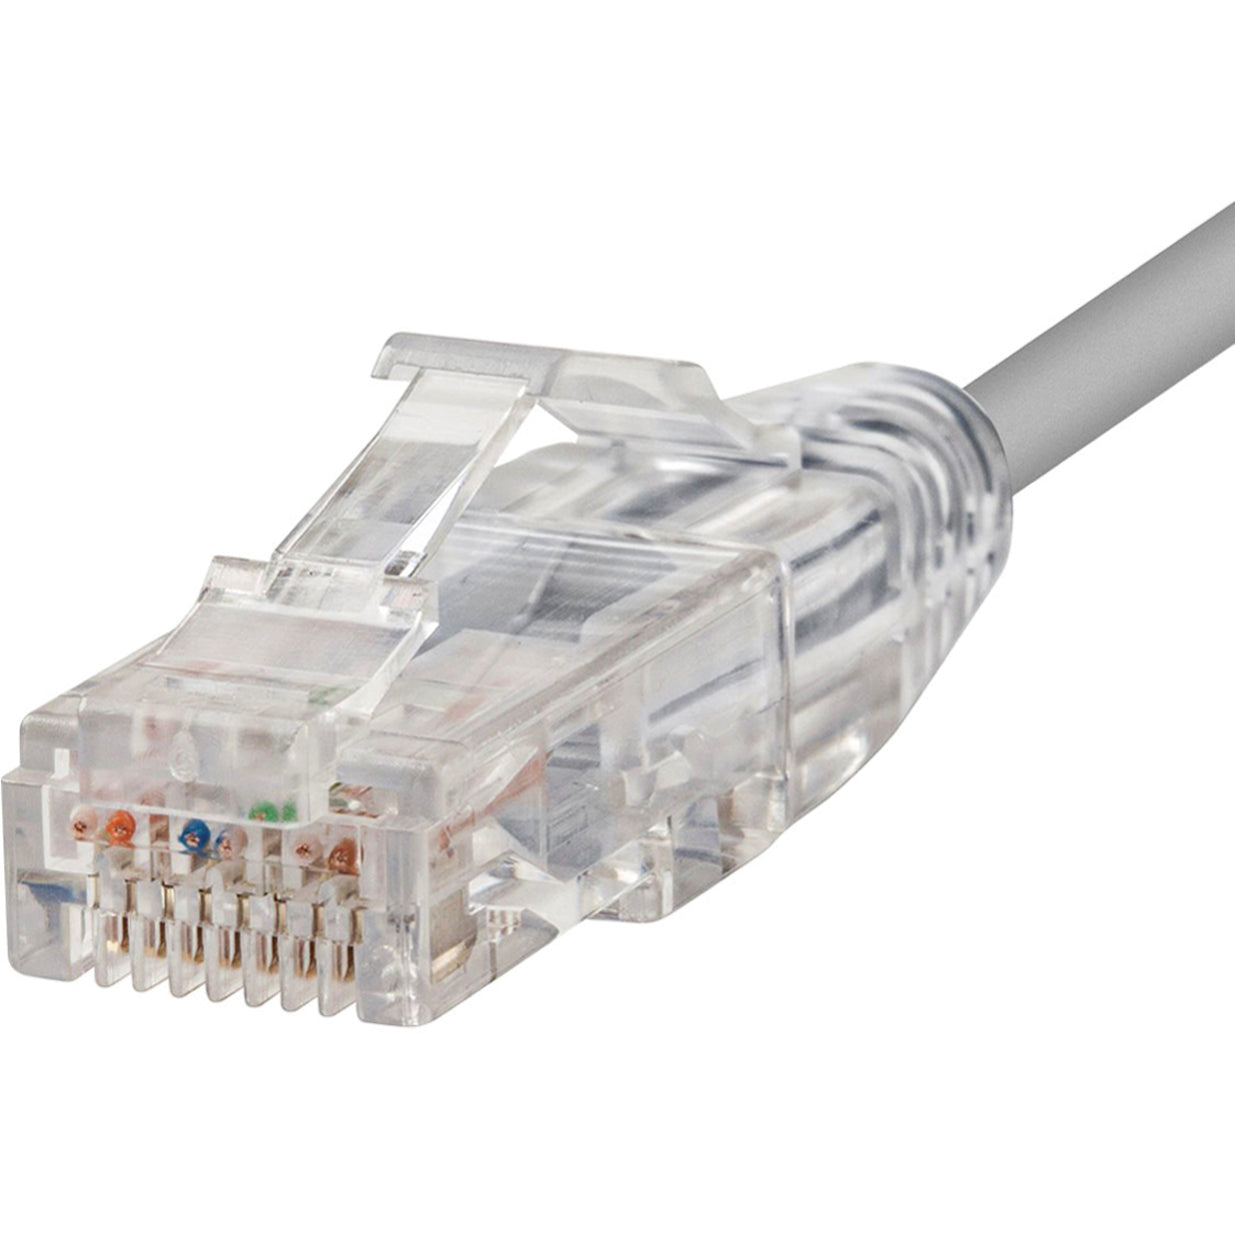 Monoprice 13524 SlimRun Cat6 28AWG UTP Ethernet Network Cable, 2ft Gray, Flexible, Snagless